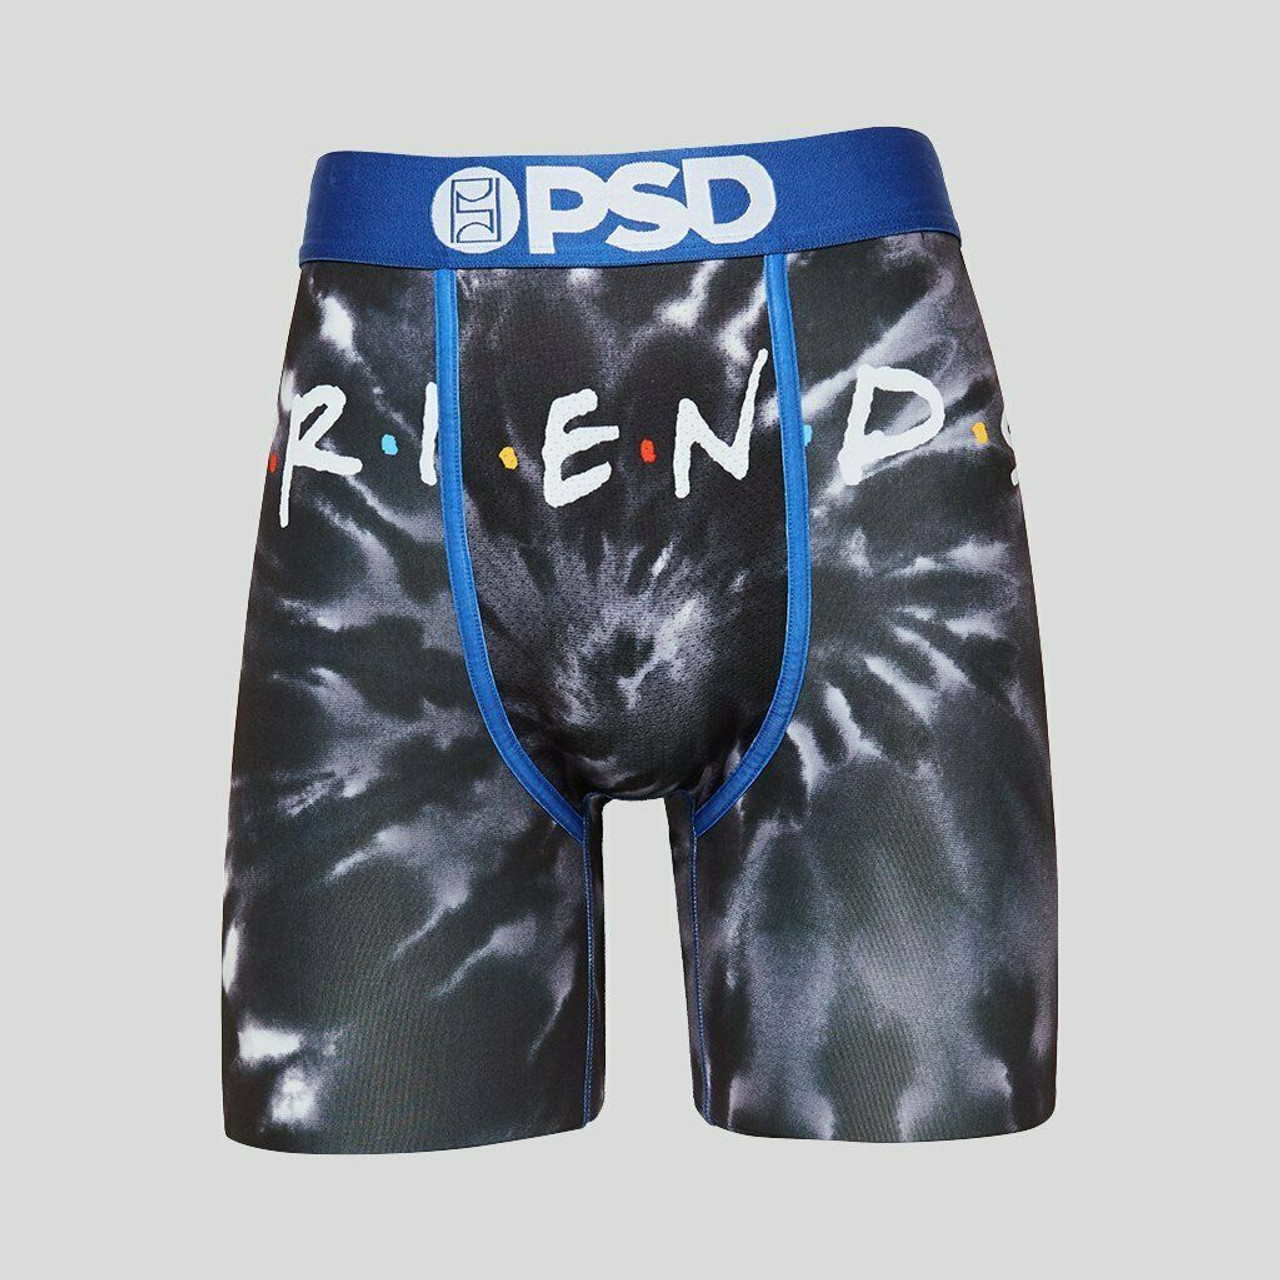 PSD Friends 90s TV Show Tie Dye Urban Athletic Boxers Briefs